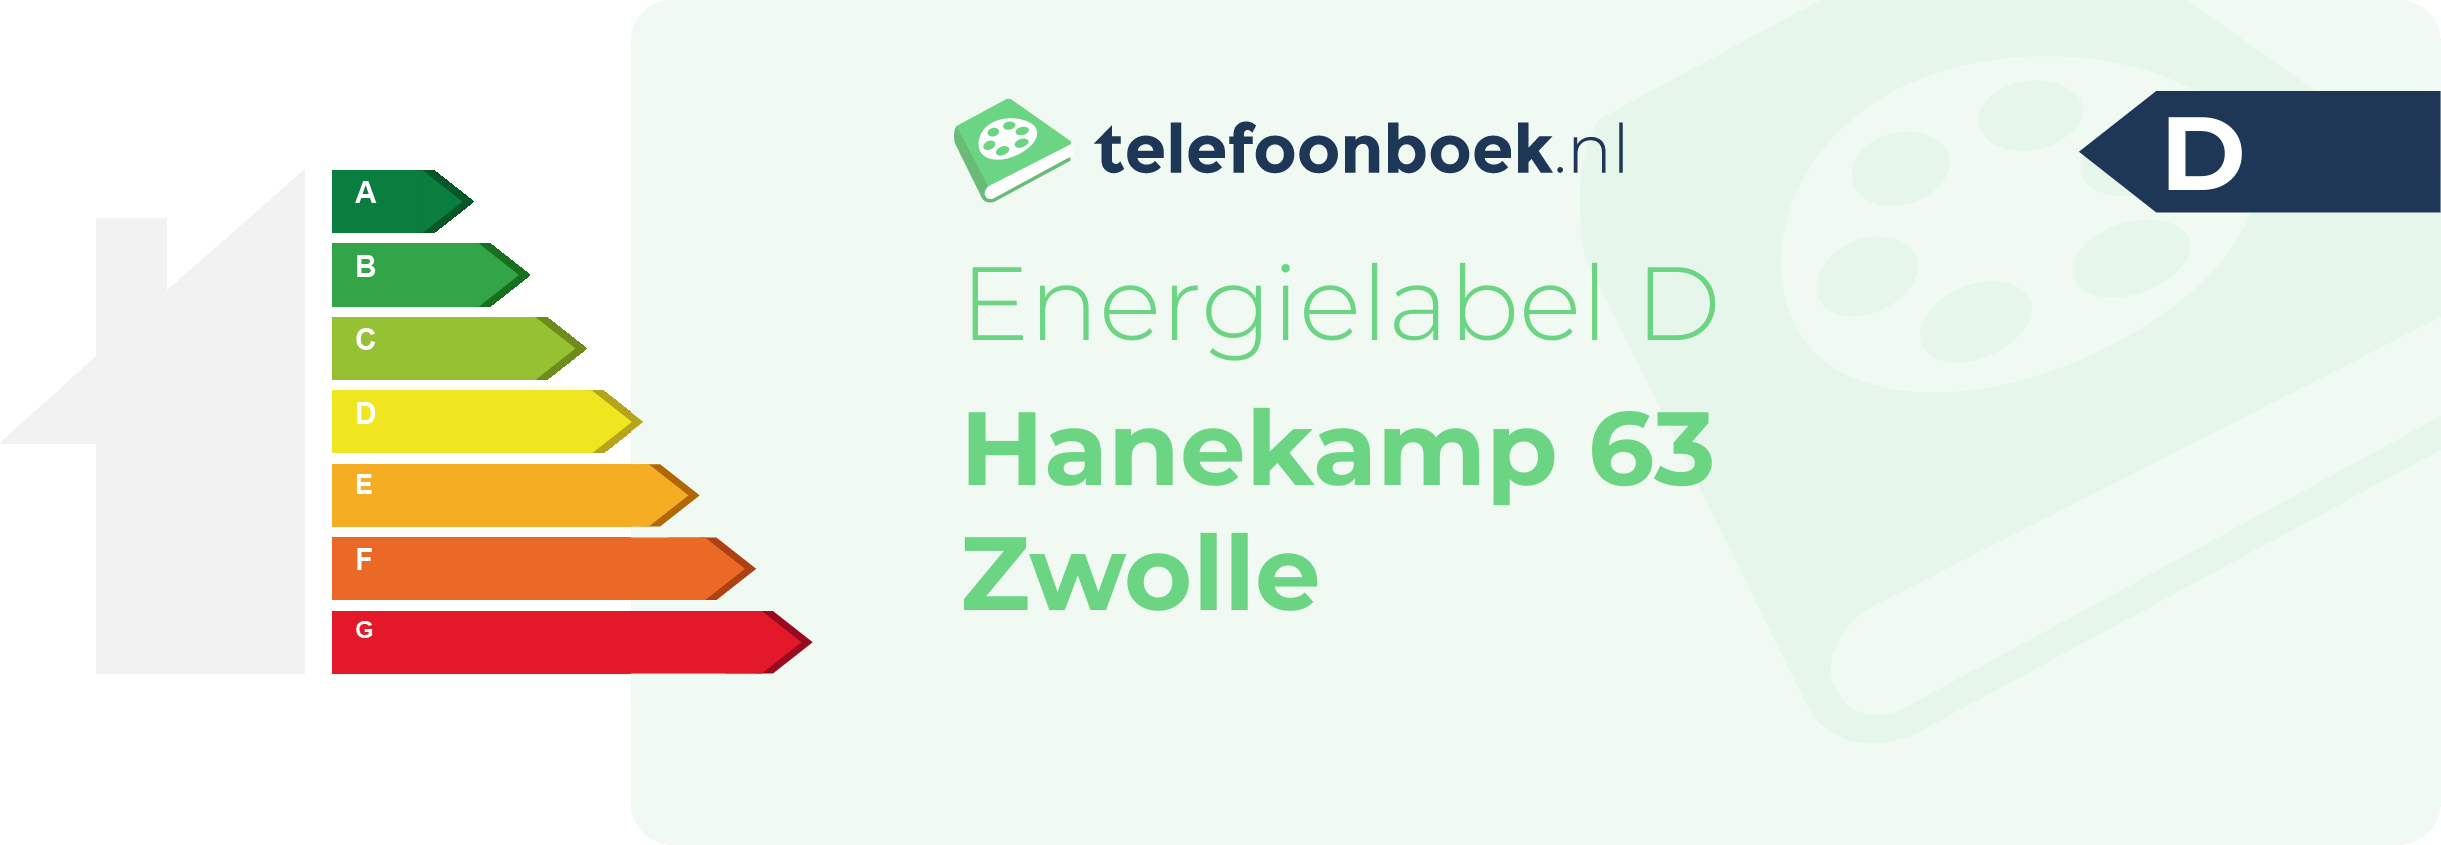 Energielabel Hanekamp 63 Zwolle